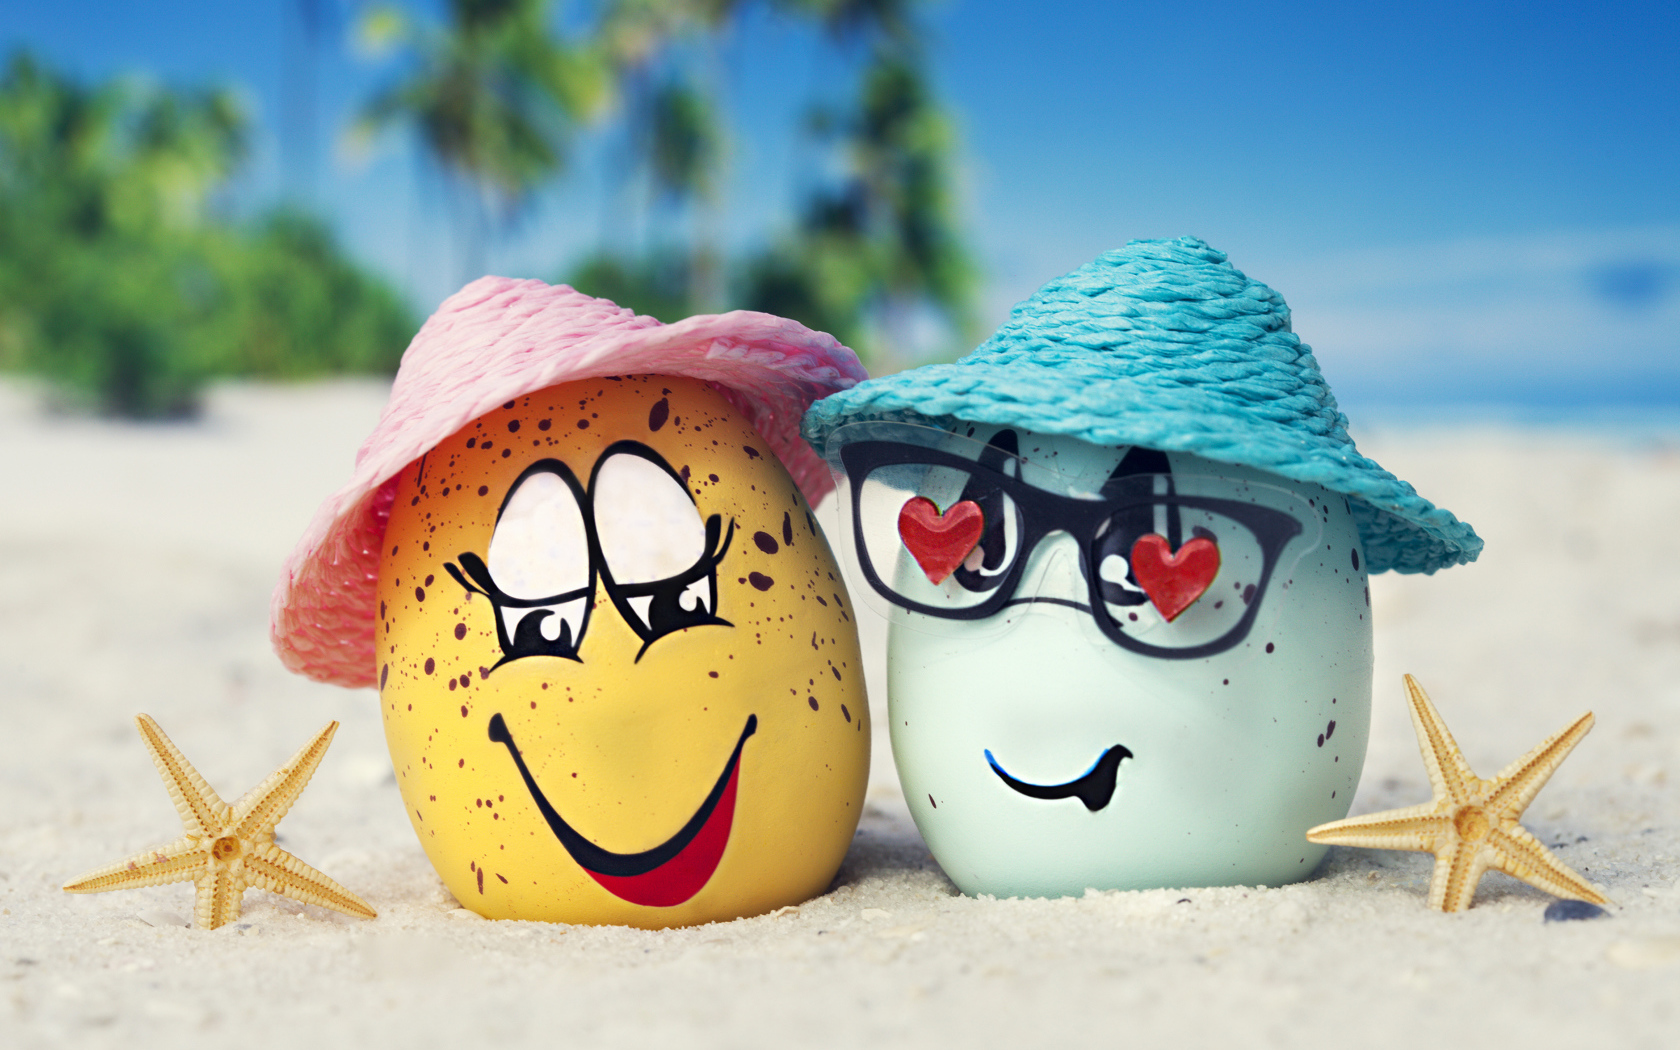 Два яйца в шляпах на песке с морскими звездами летом